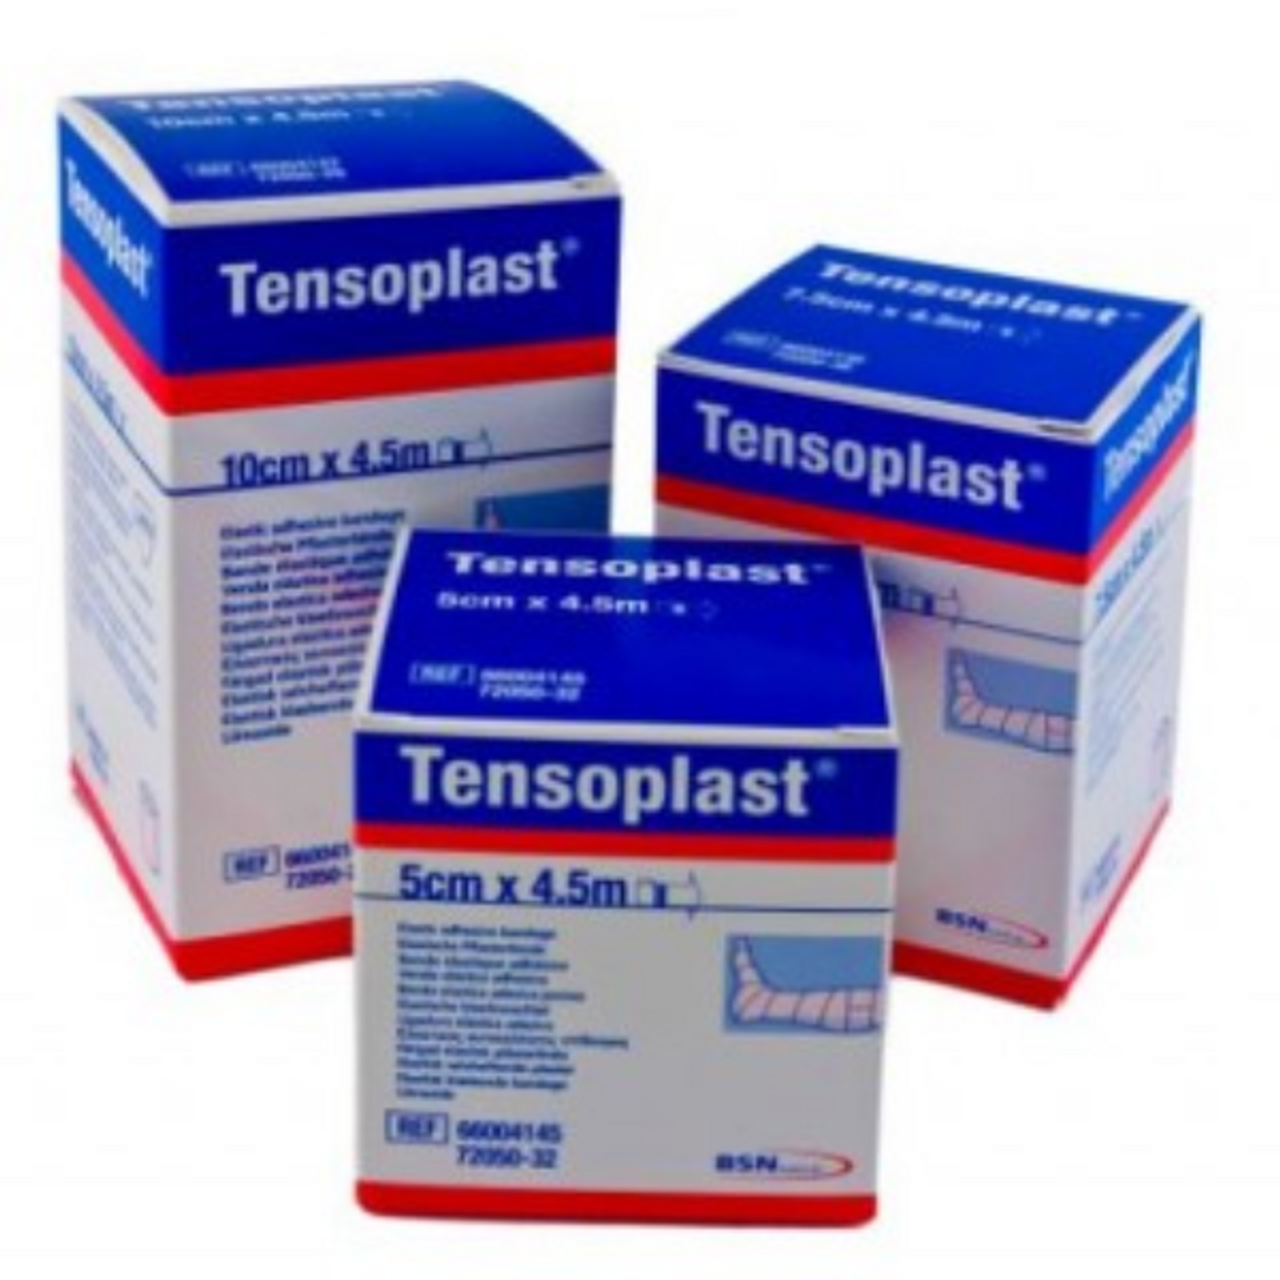 BSN Medical Tensoplast Elastic Adhesive Bandage